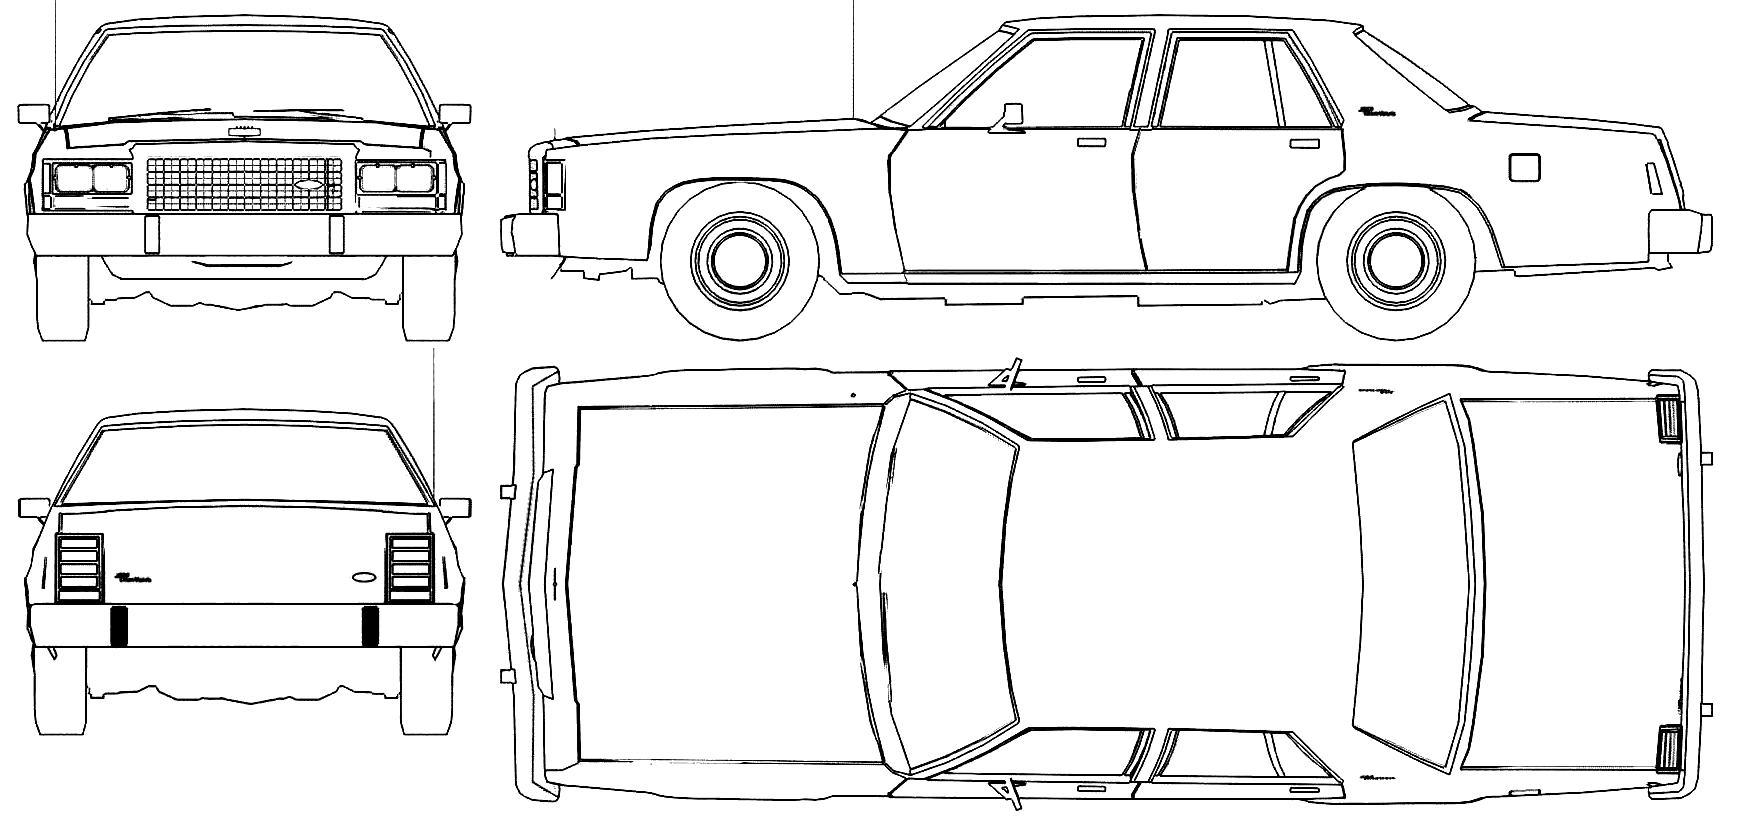 Ford Crown Victoria blueprint